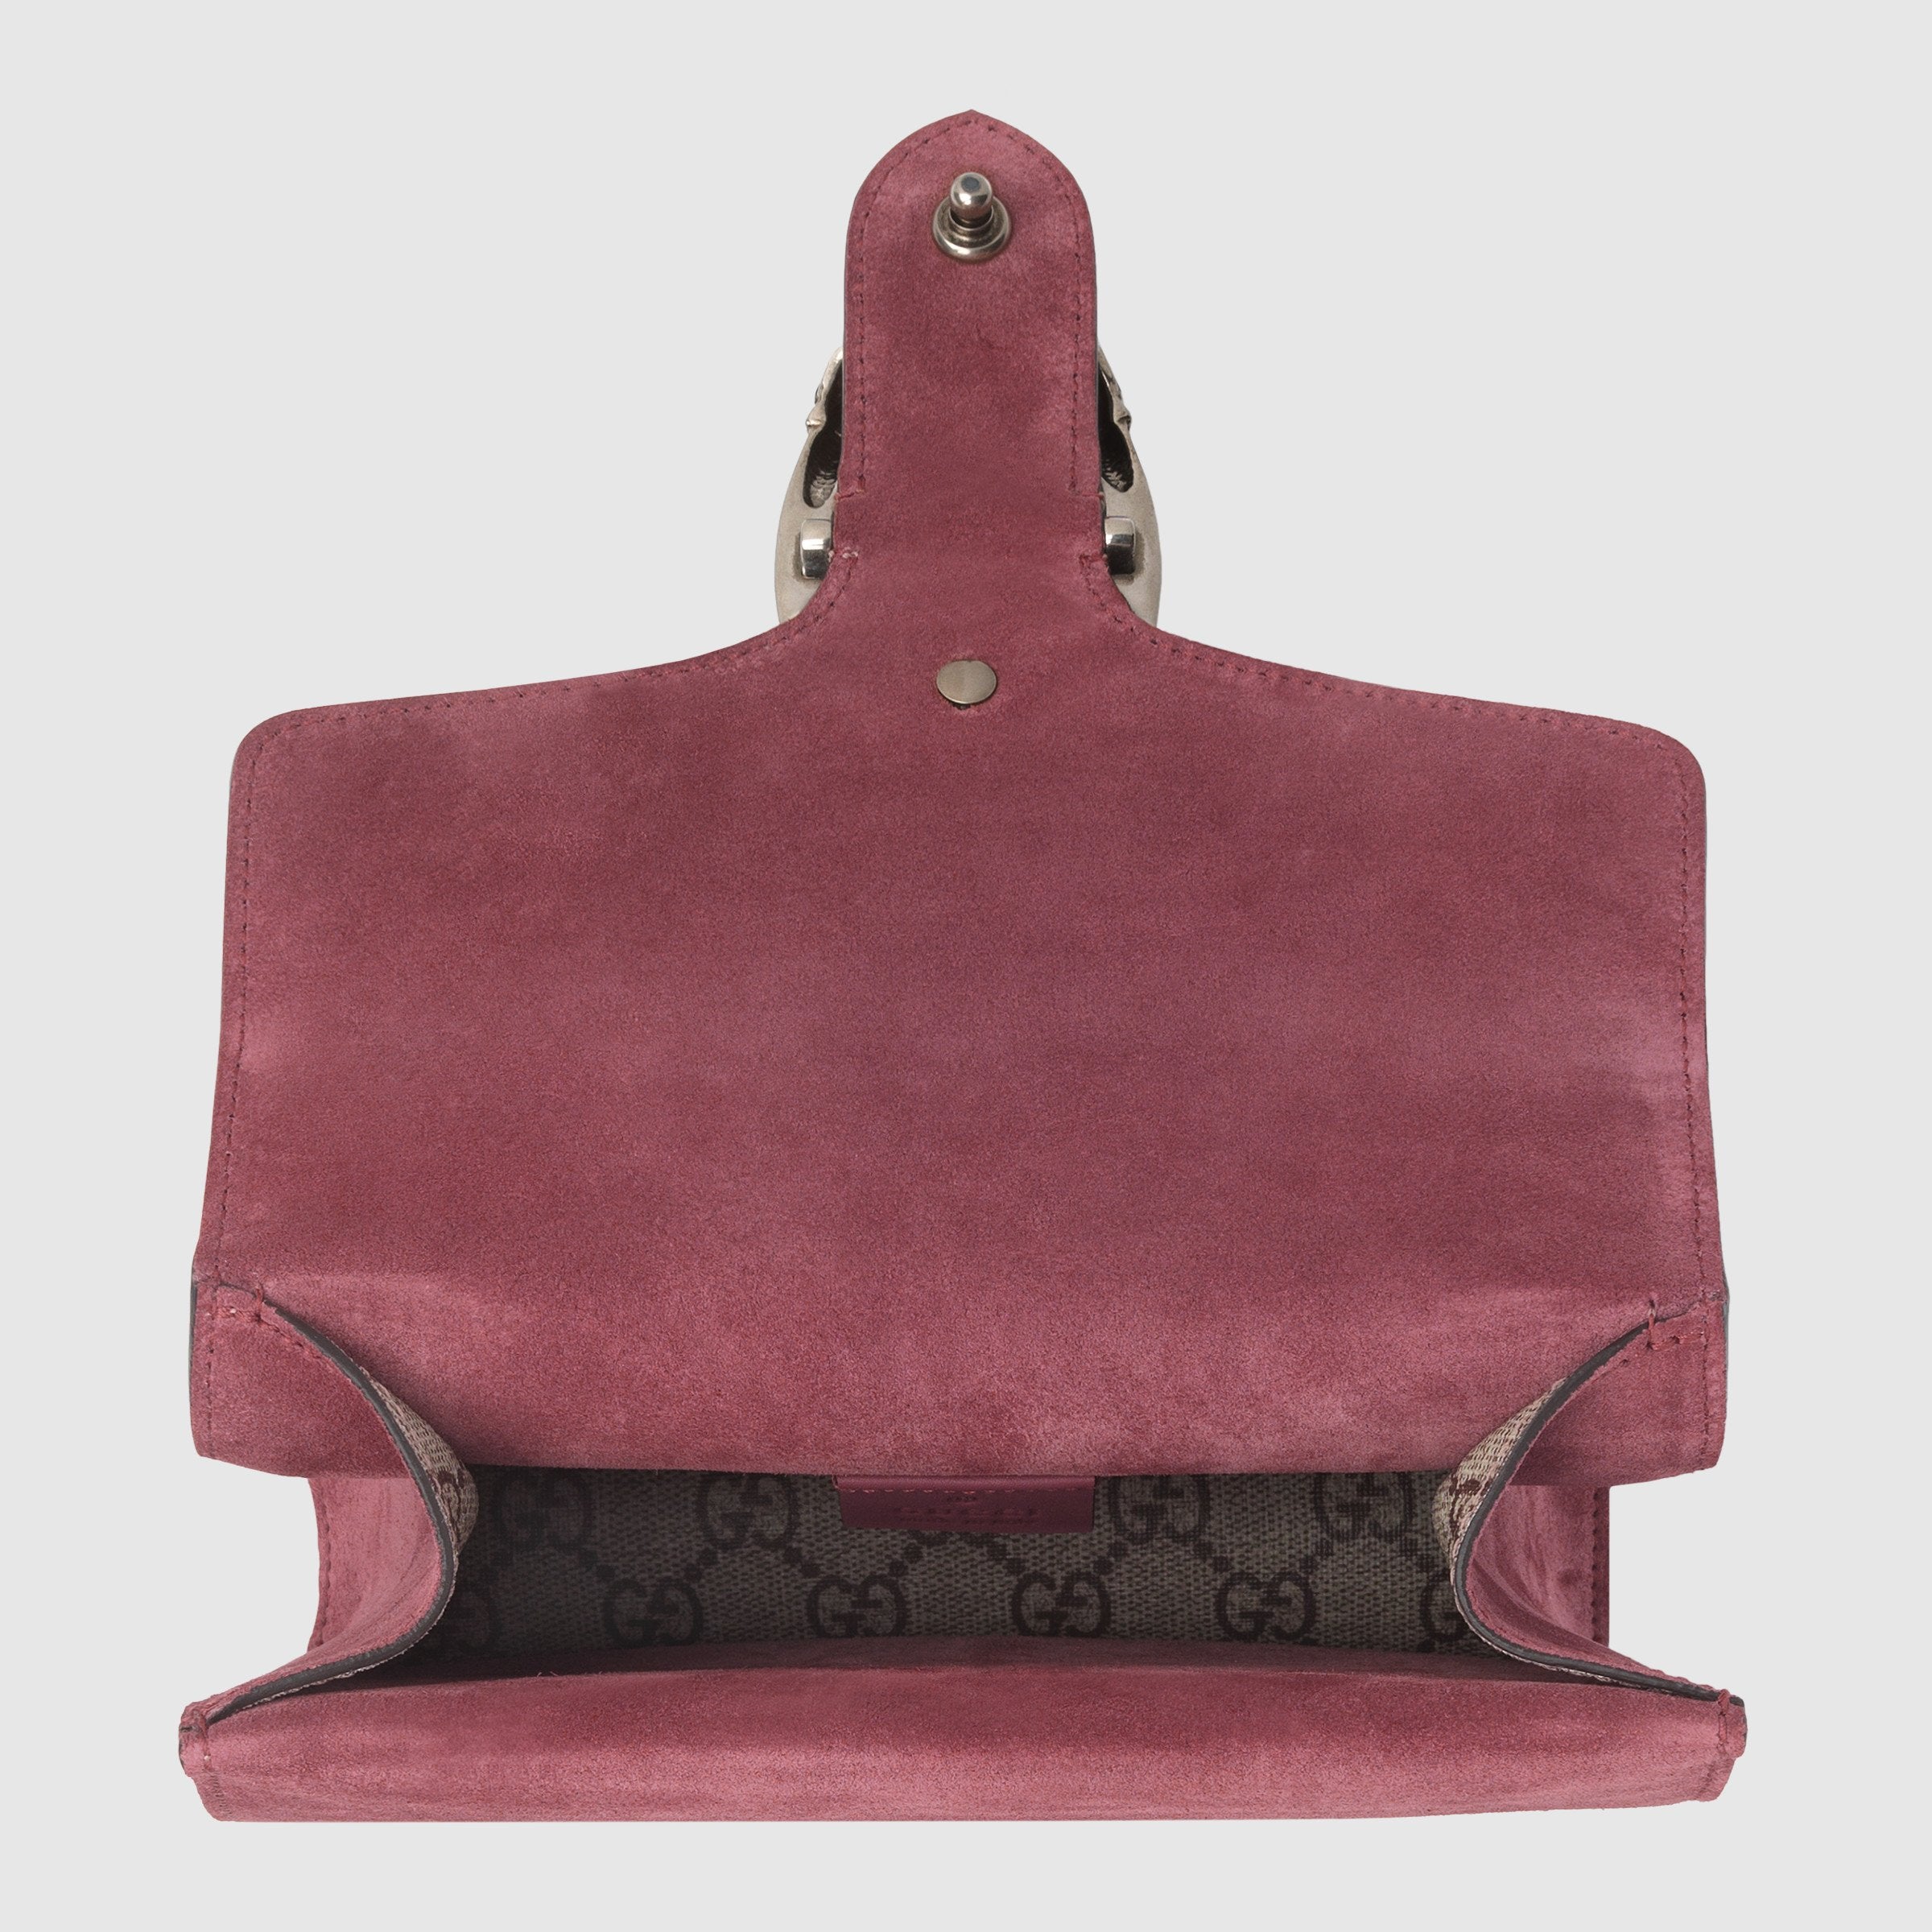 Gucci Blooms Dionysus GG Supreme Mini Bag Beige Red